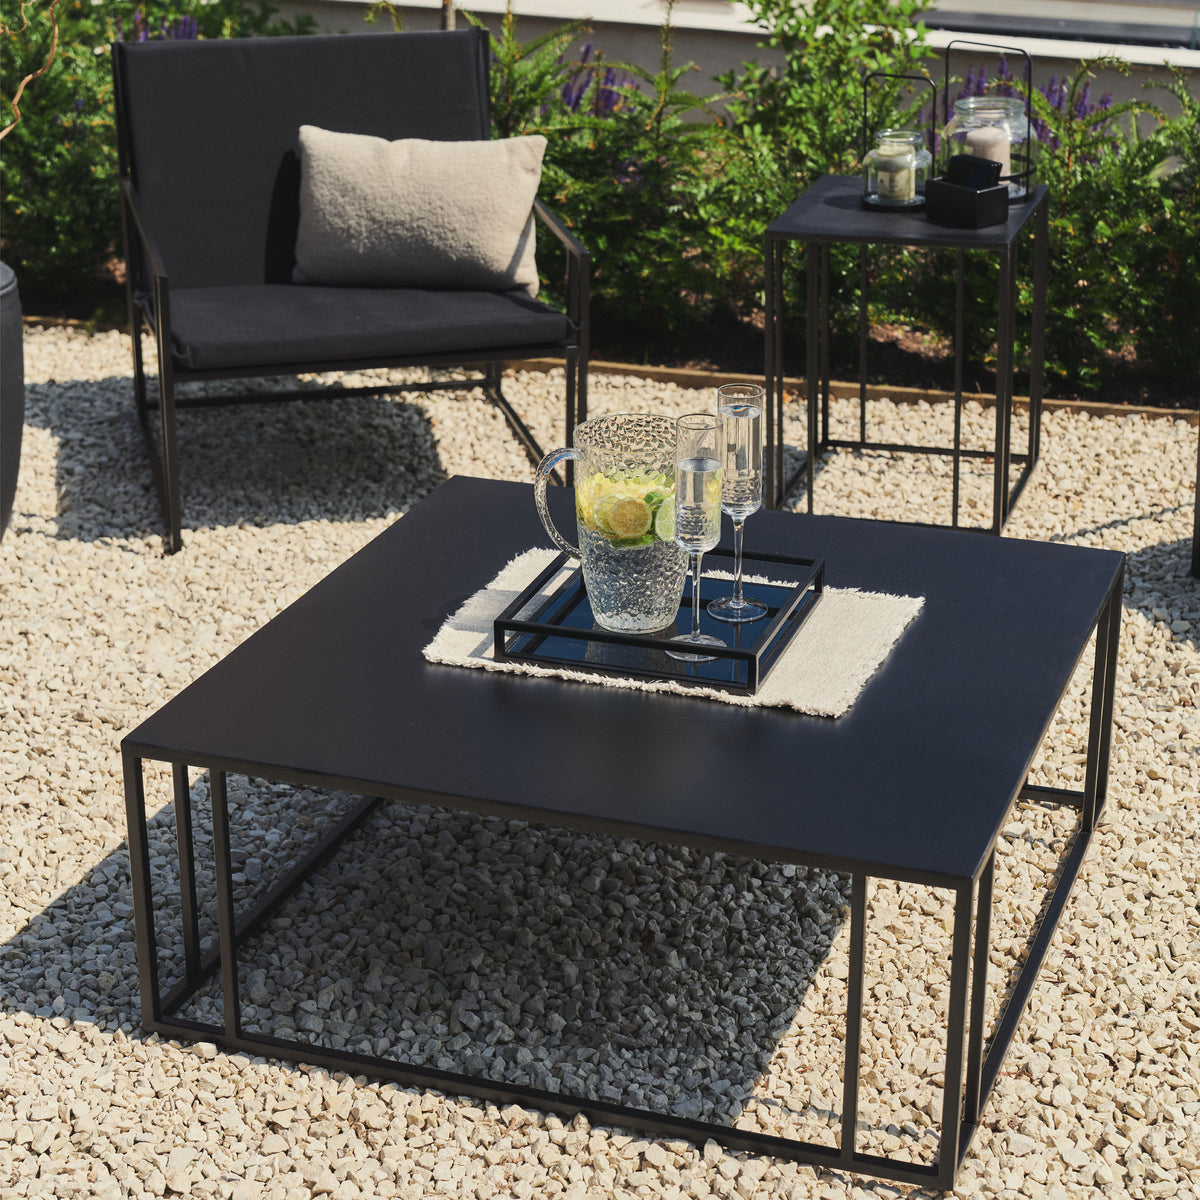 Rectangular Black Modern Garden Coffee Table with jug holding citrus drink